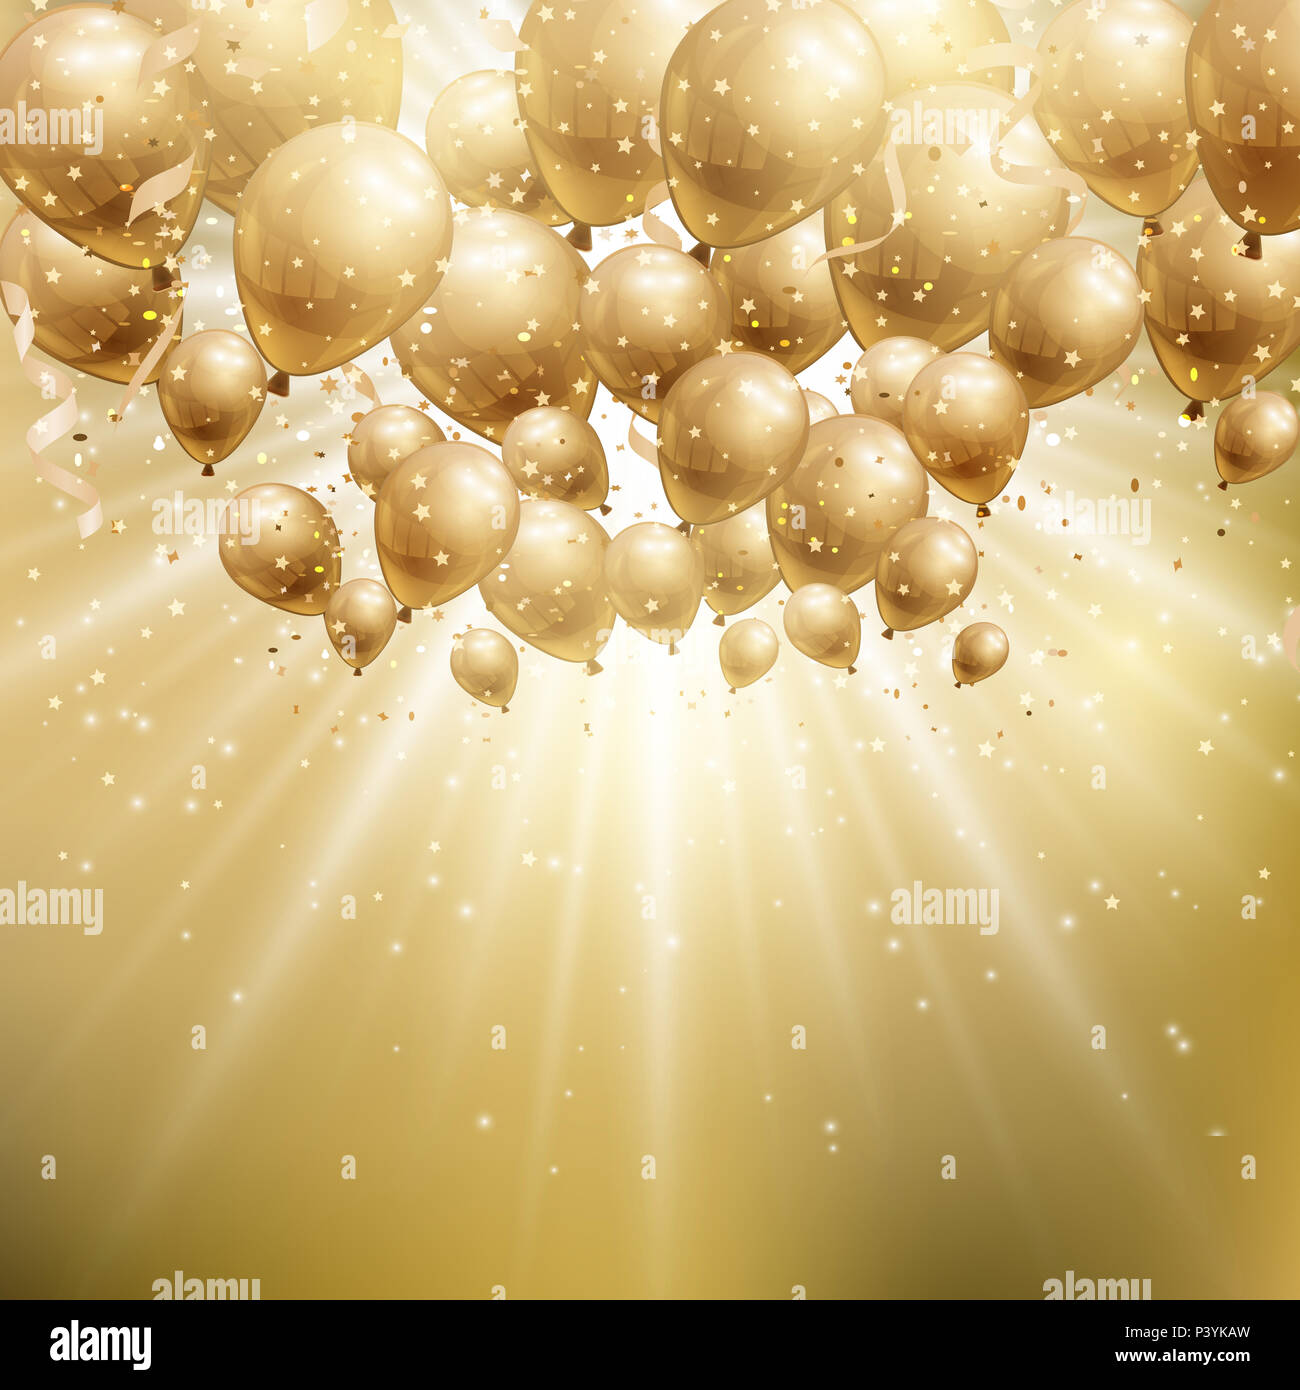 Celebration background with golden balloons Stock Photo - Alamy